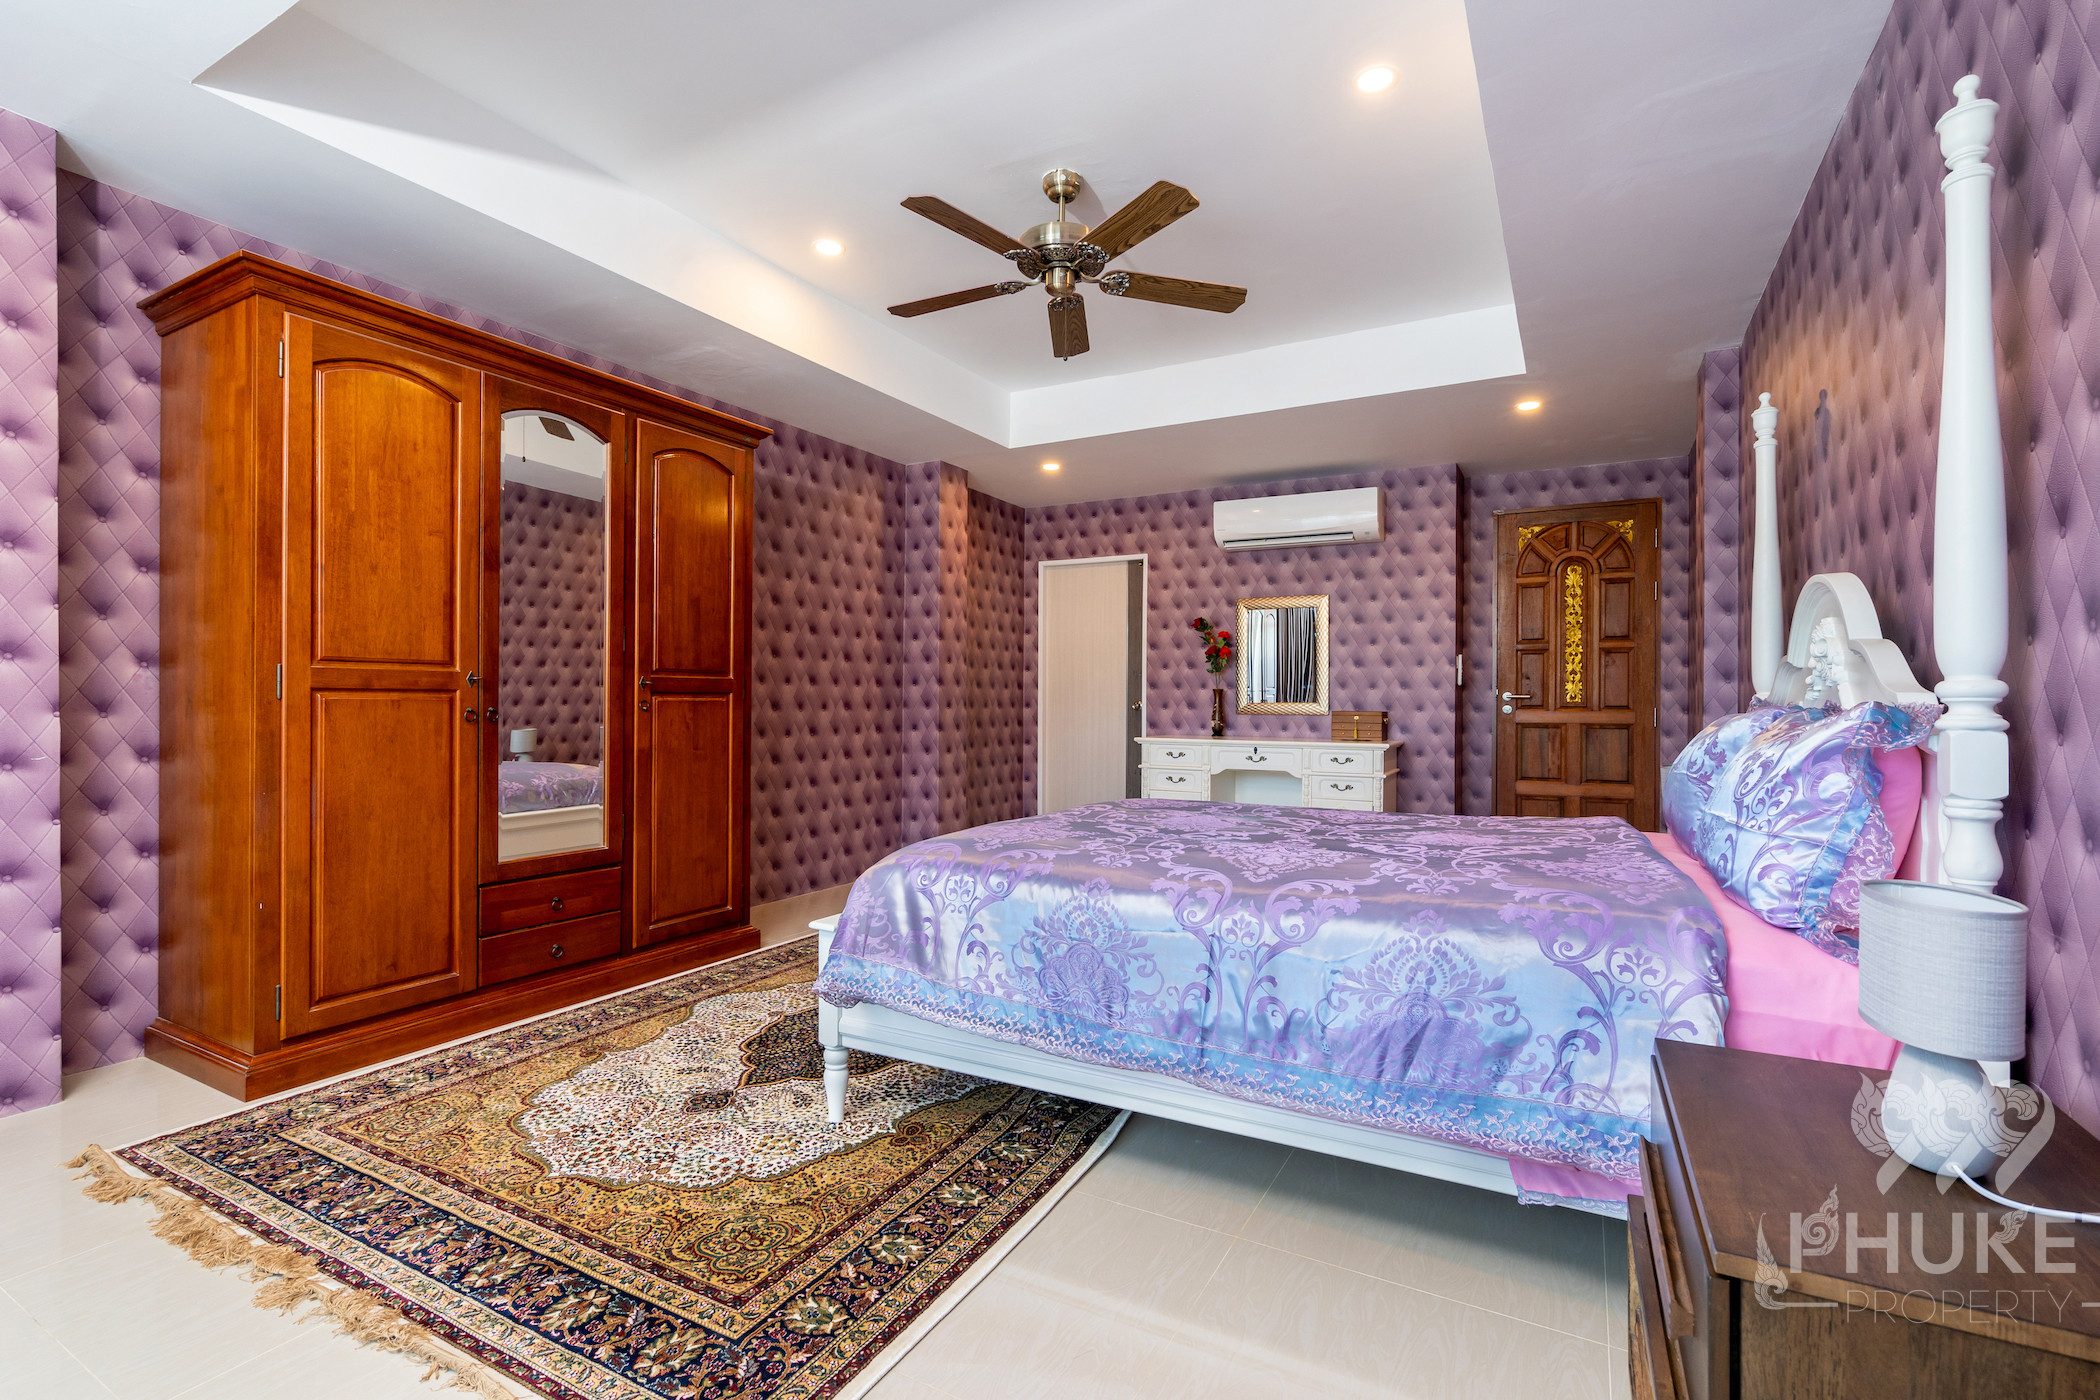 Villa Castle Patong for Sale or Rent Phuket | 999PhuketProperty